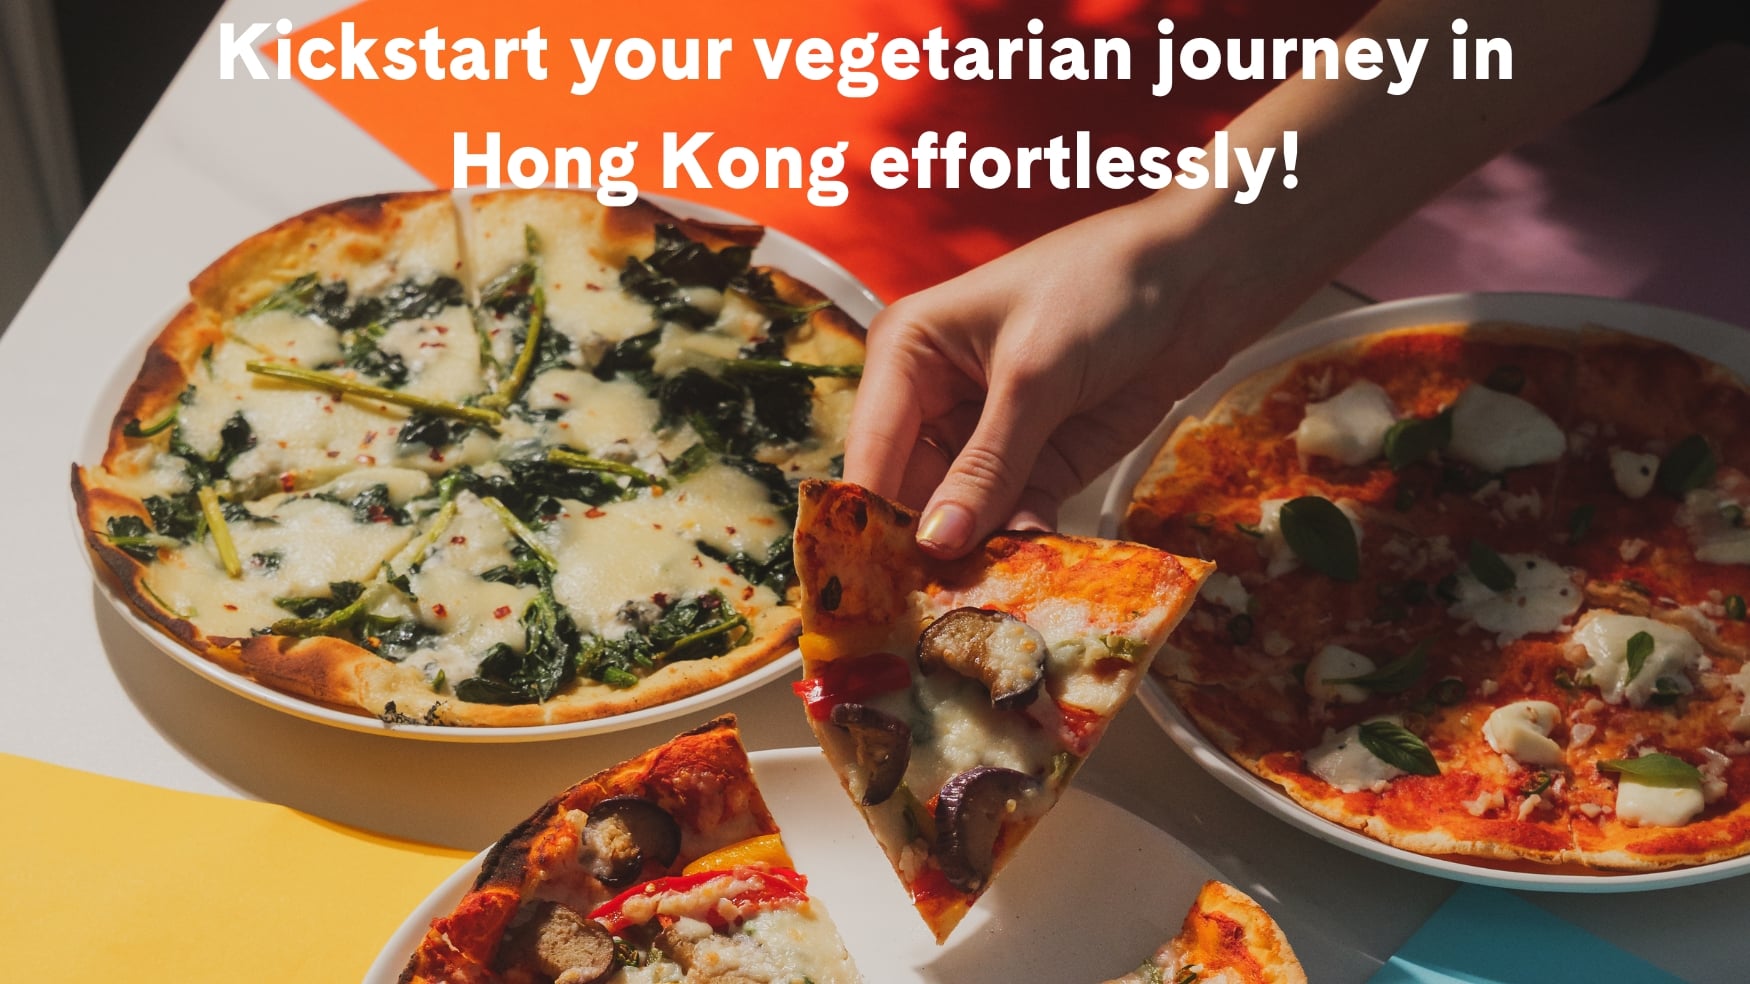 Kickstart your vegetarian journey in Hong Kong effortlessly!